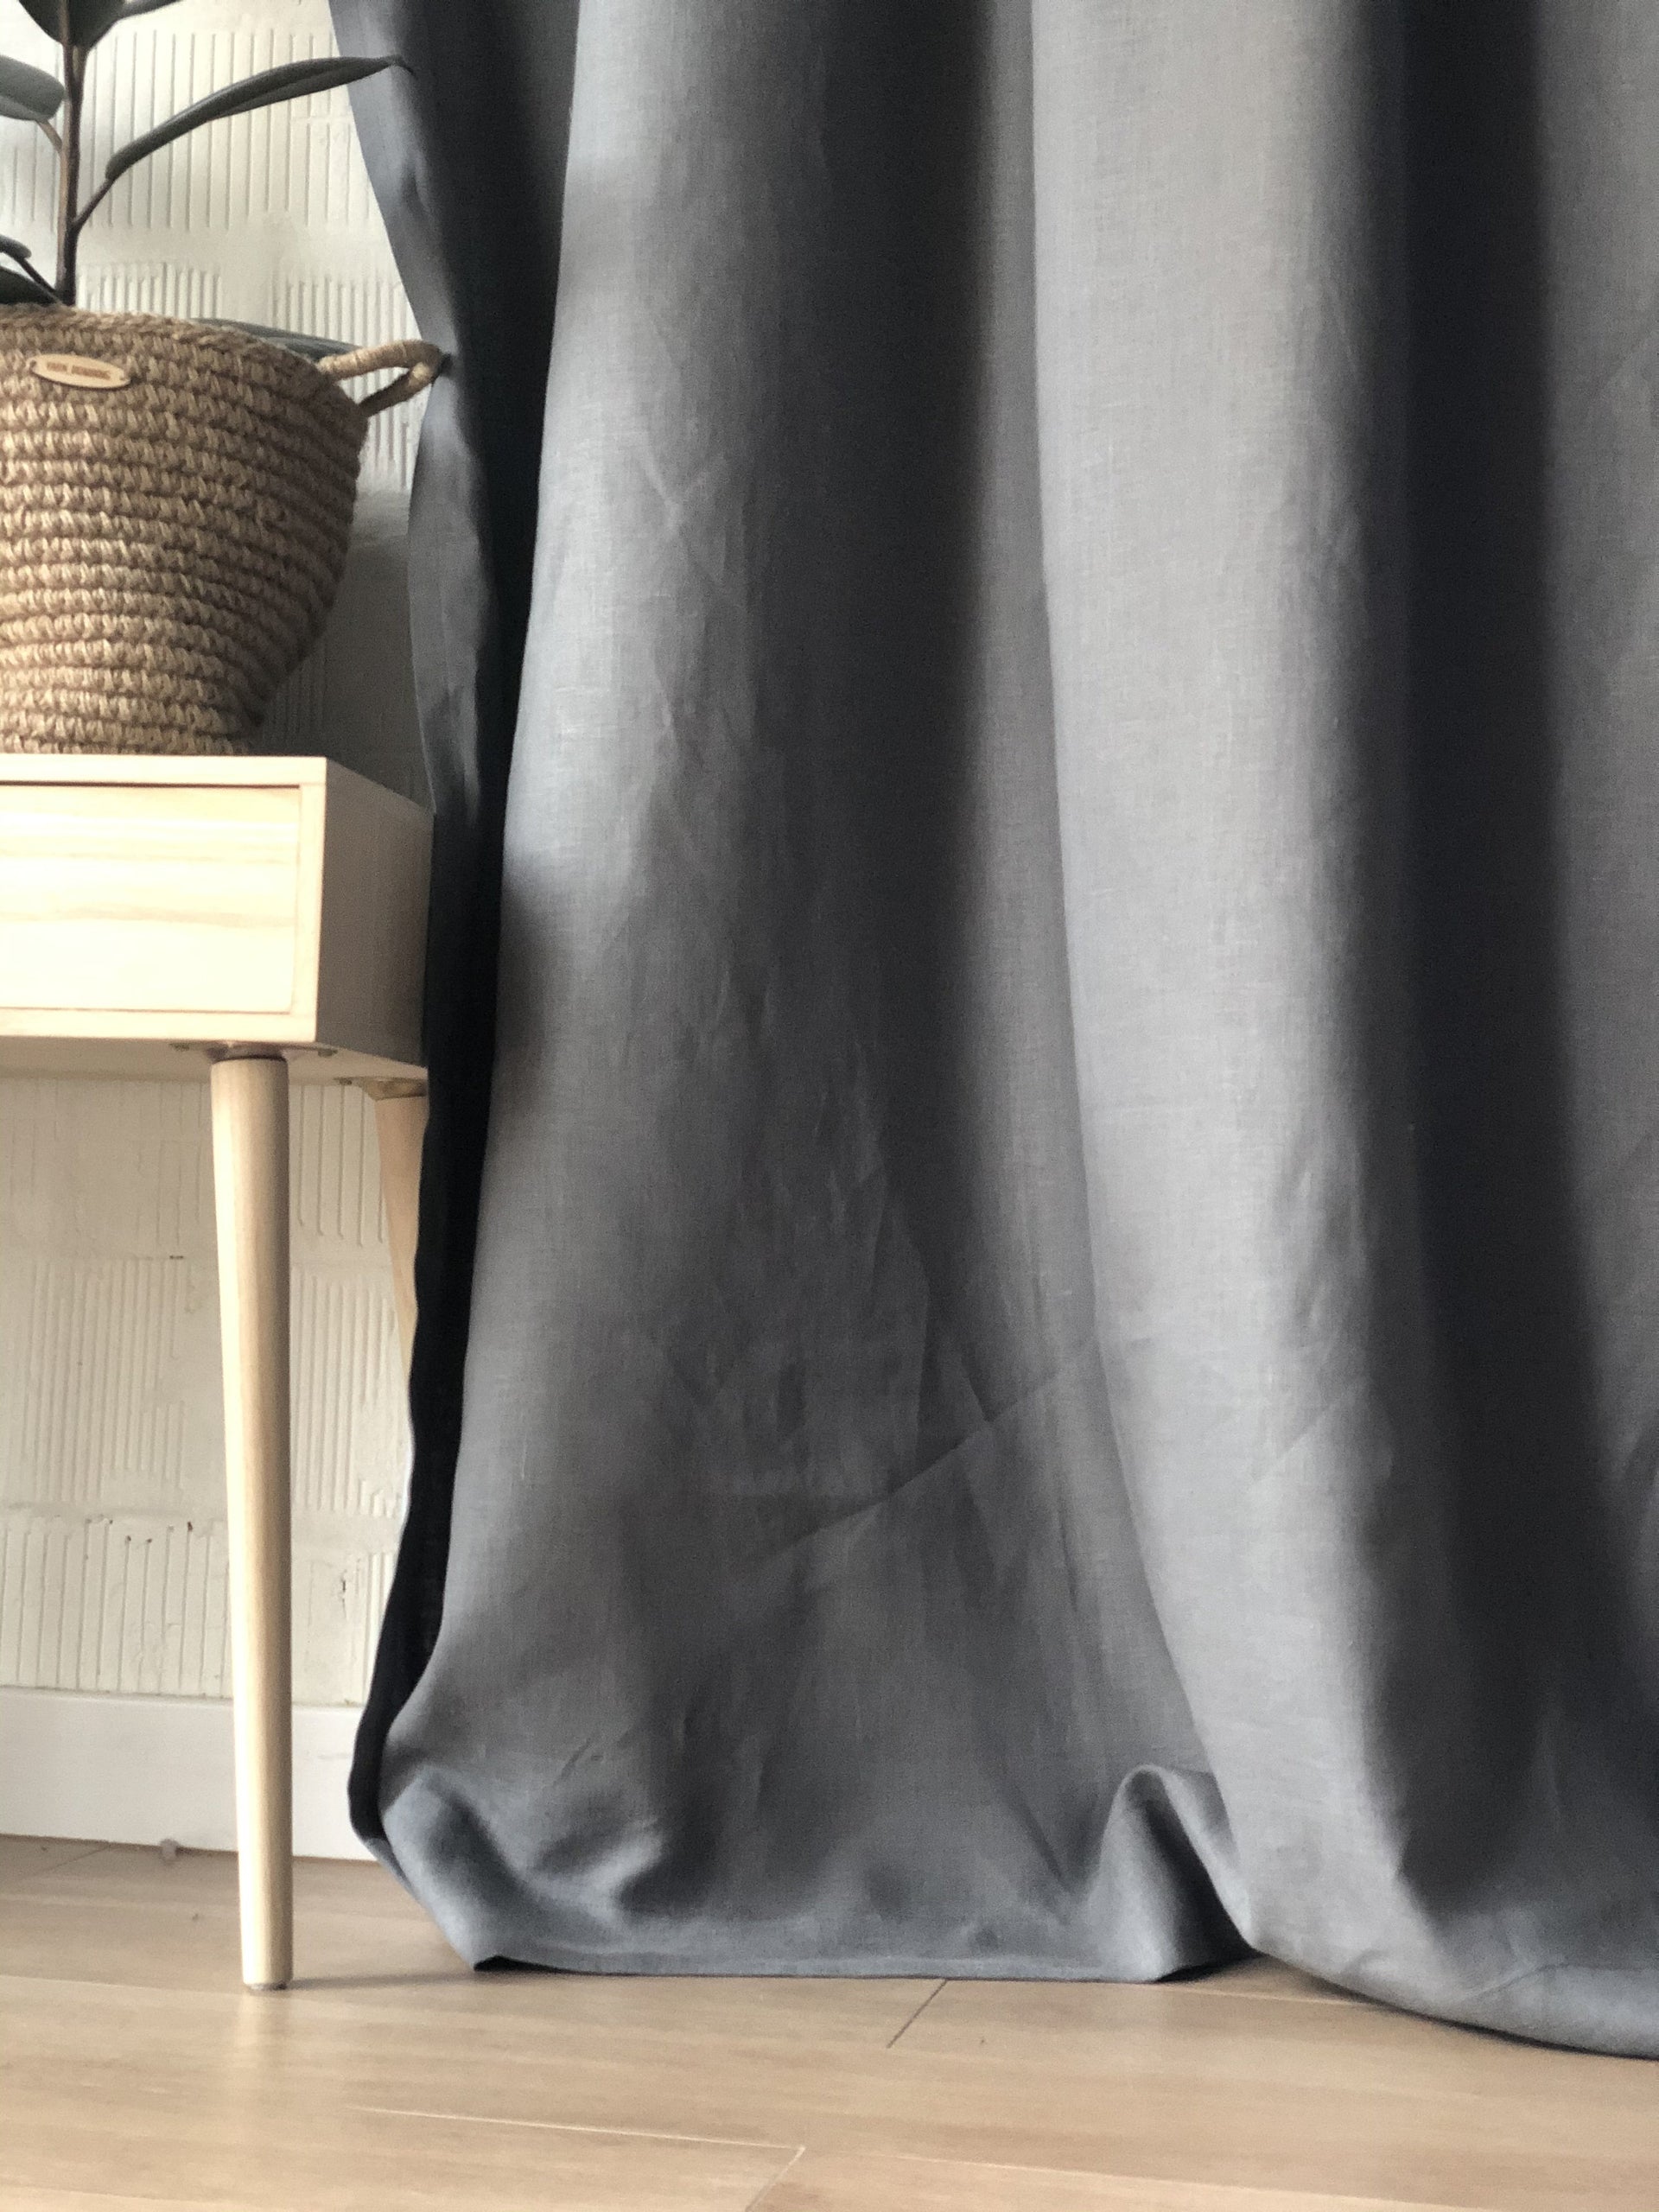 Pole Pocket Linen Curtain